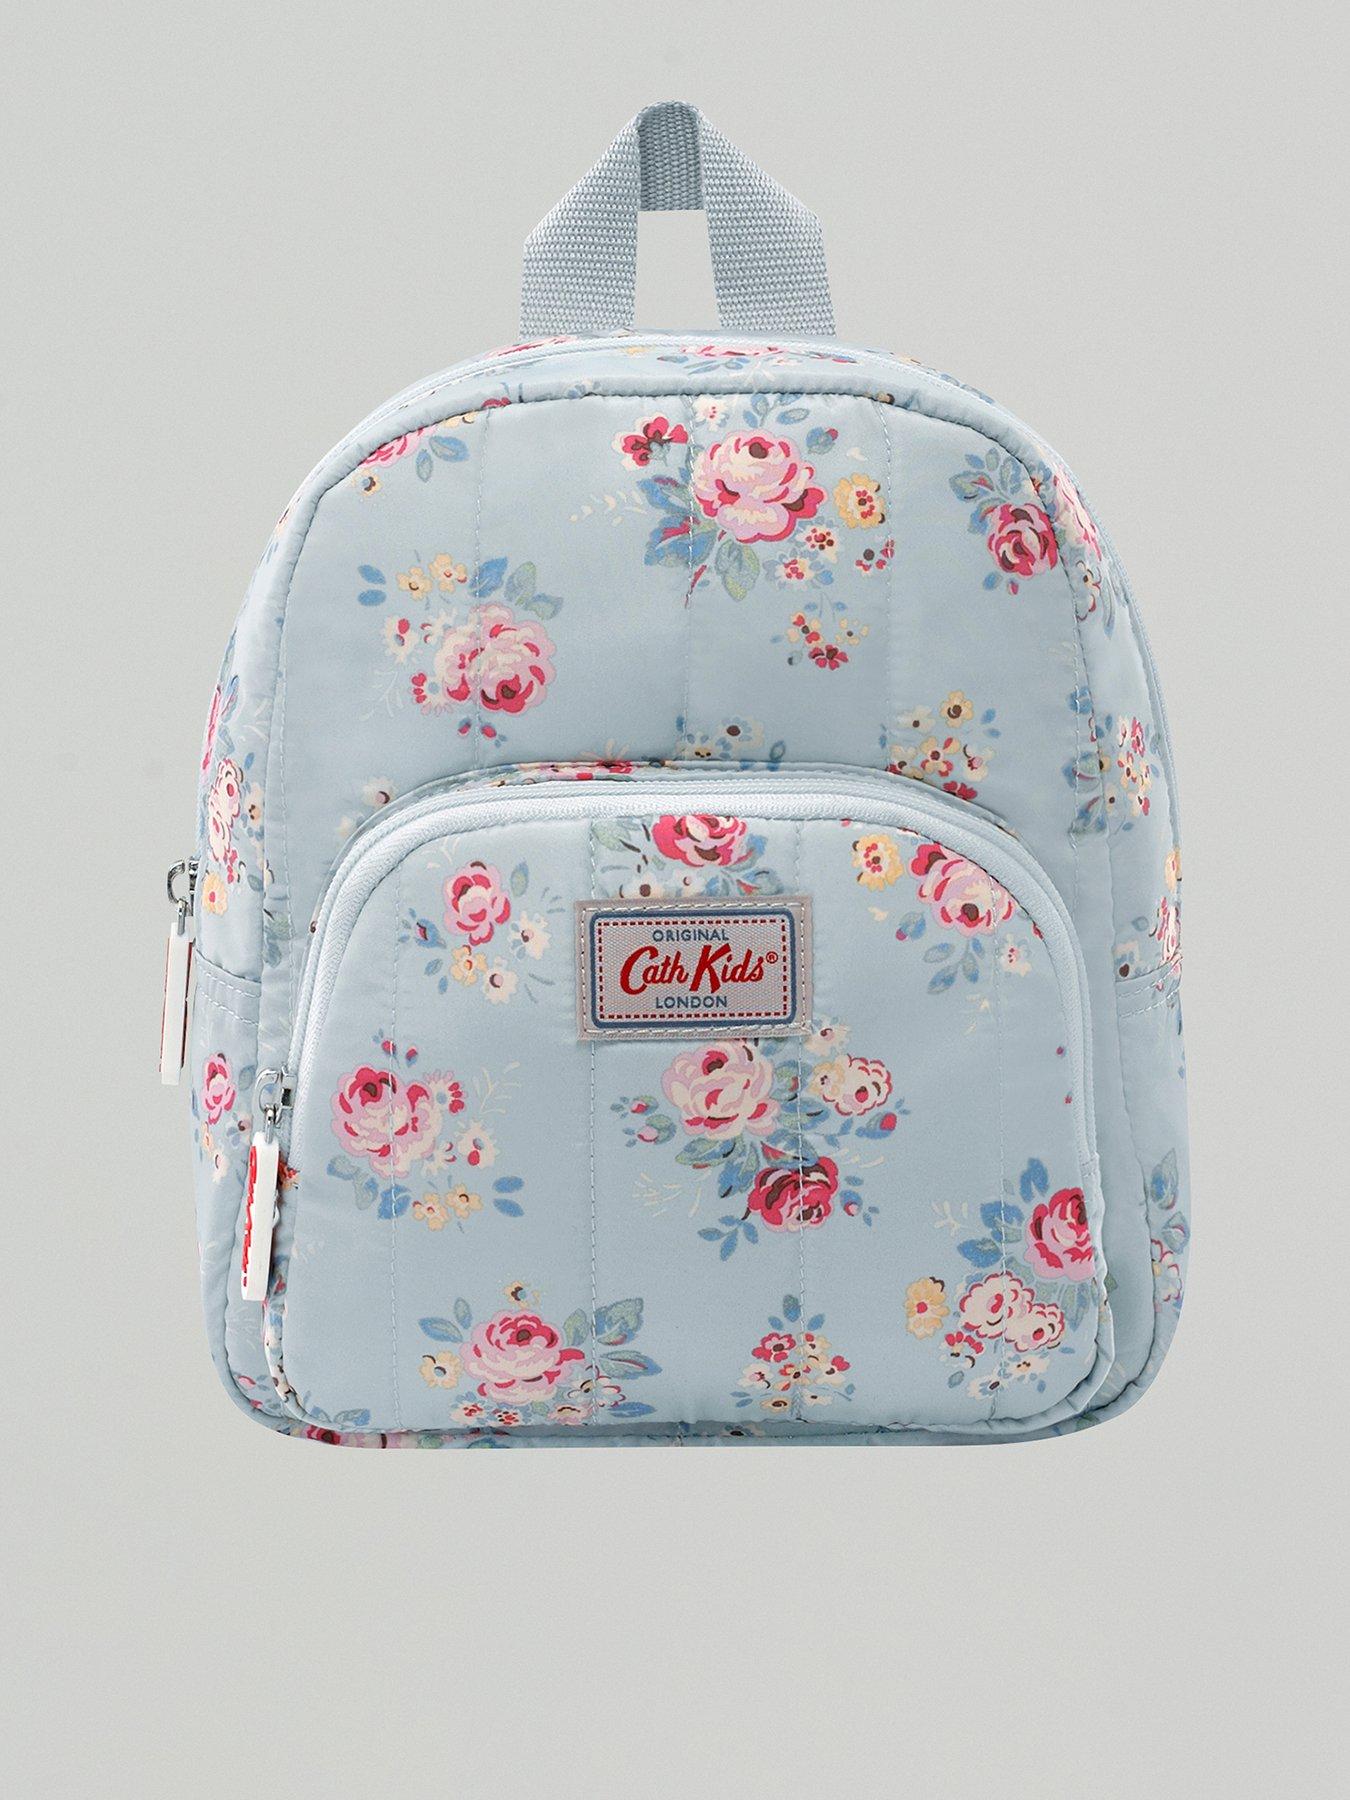 LOL Surprise Doll Unicorn Personalised School Bag Girl Backpack Rucksack 3M Gift